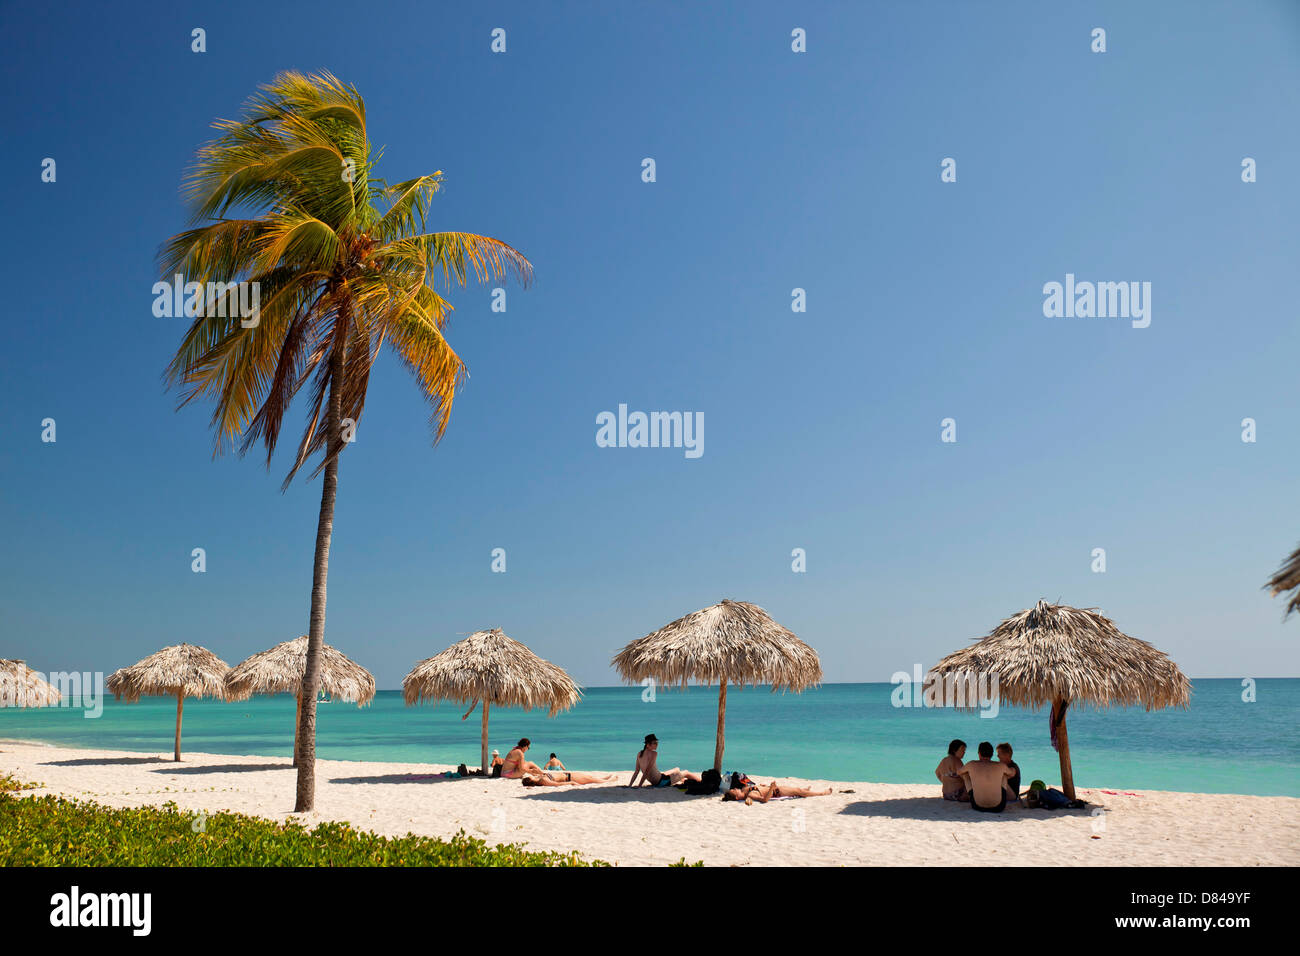 beach Playa Ancon near Trinidad, Cuba, Caribbean Stock Photo